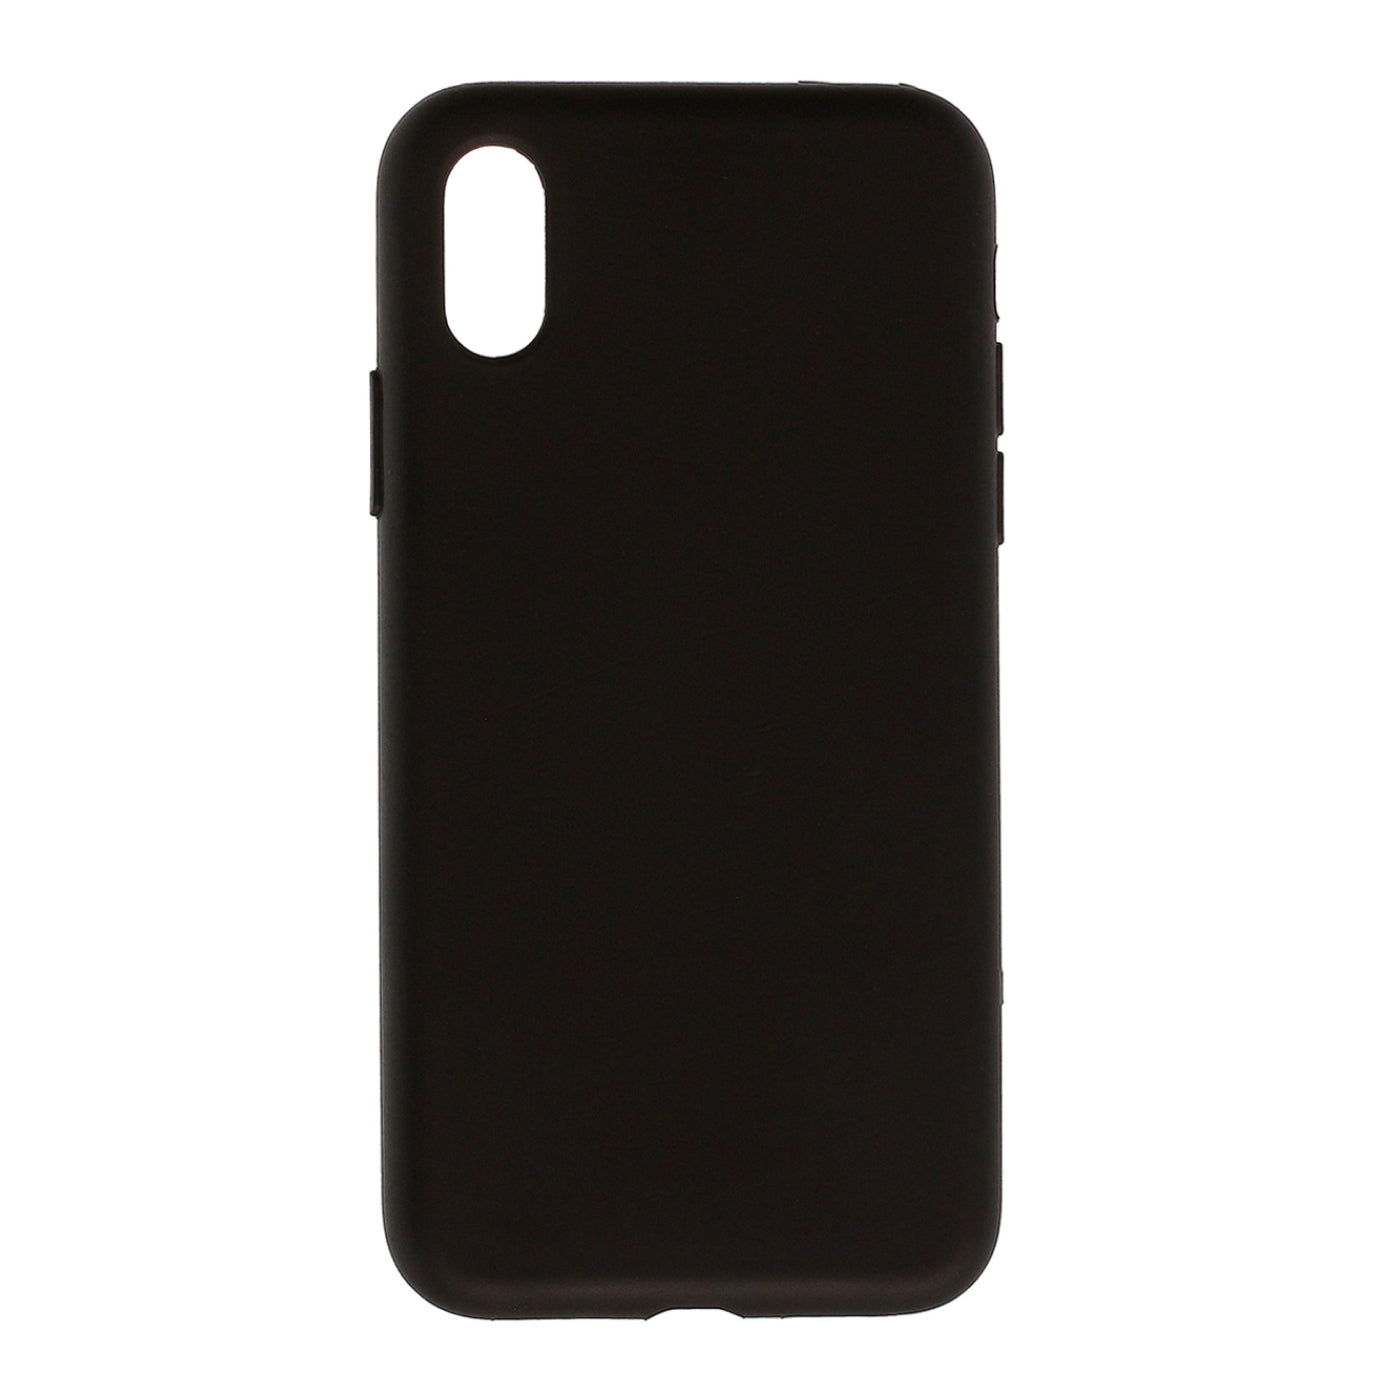 Liquid Phone Case - Black - Apple iPhone XS Black New - Sealed